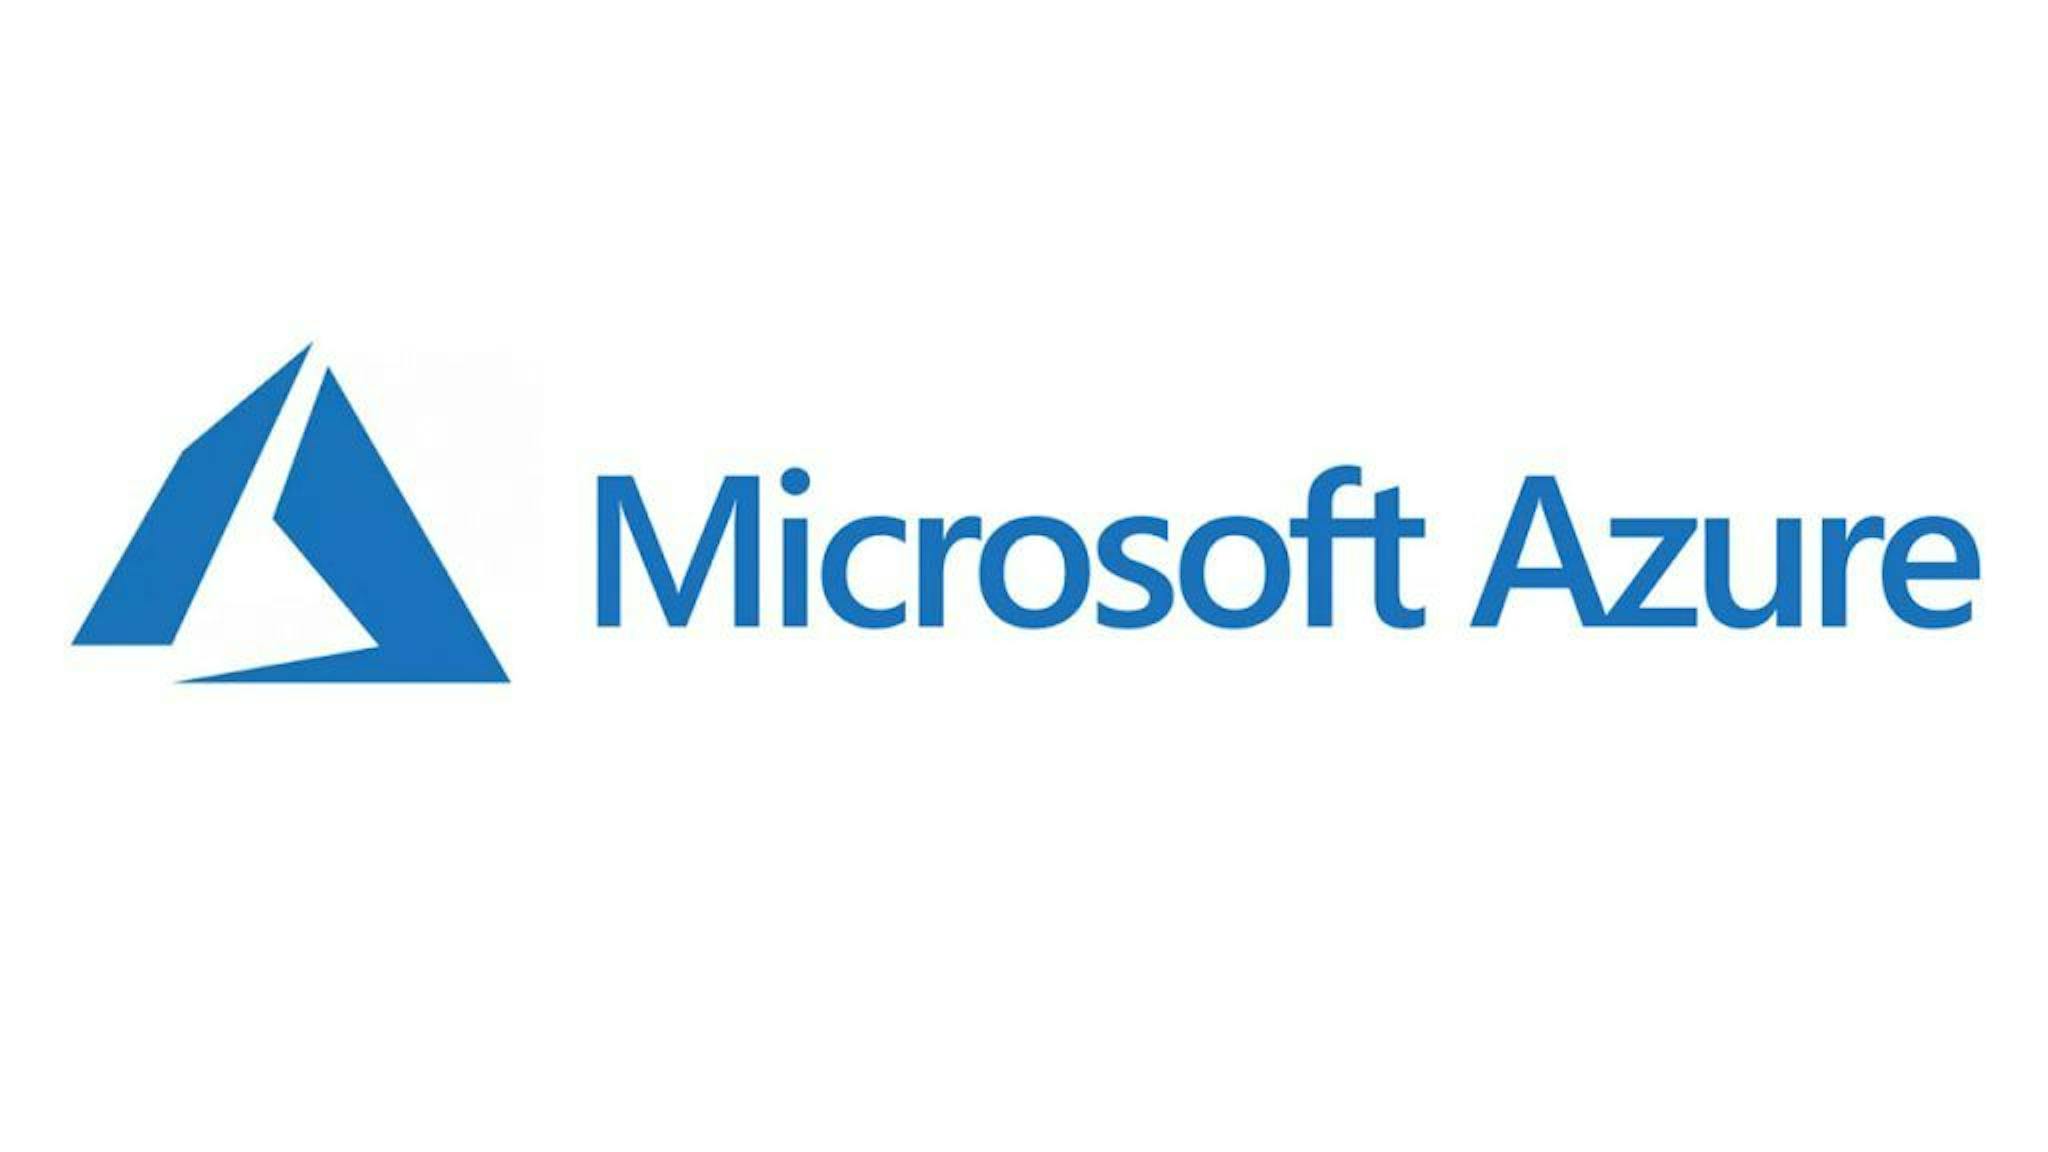 (Microsoft Azure logo)